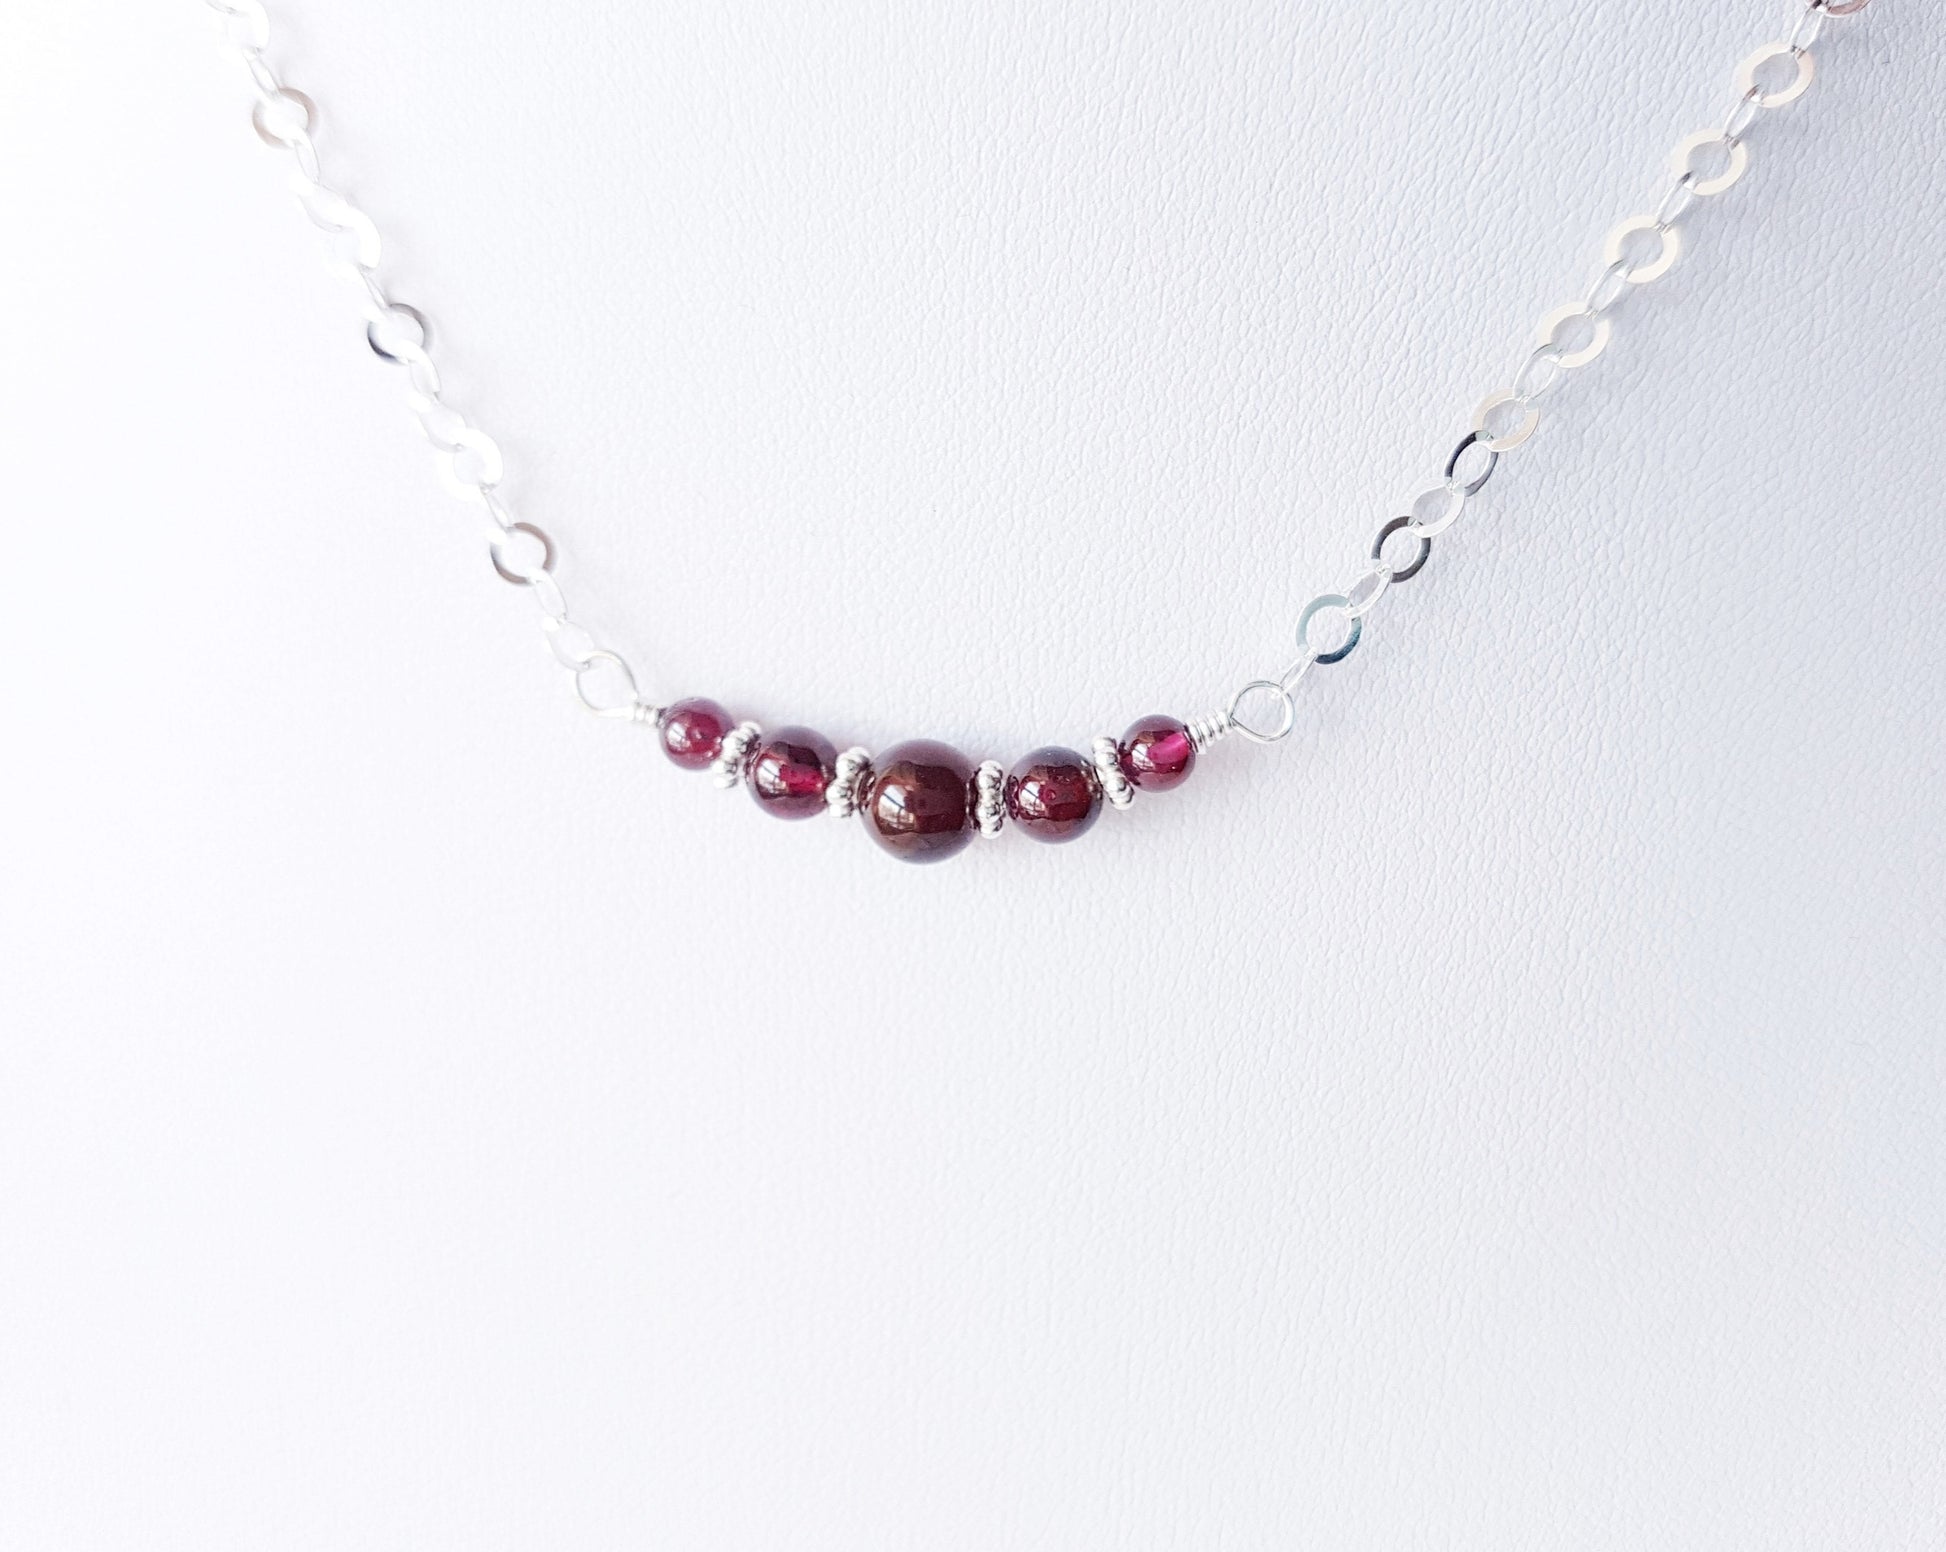 Juicy Garnet Necklace-Sterling Silver Genuine Garnet Necklace-Handcrafted-Natural Pinkish Red Garnets